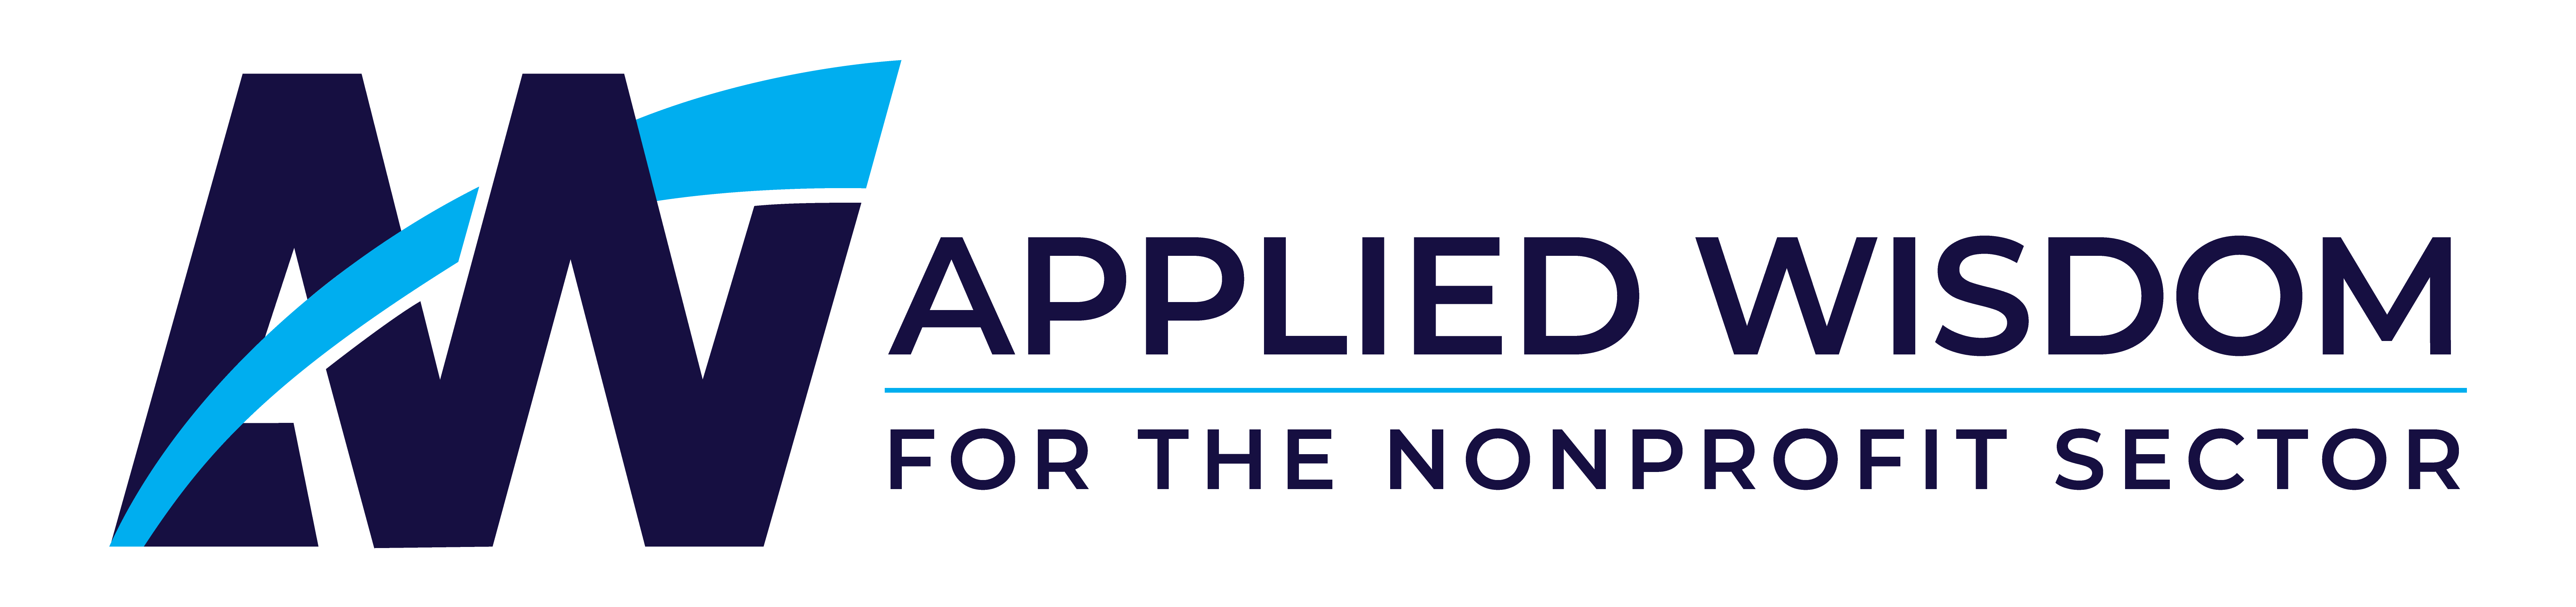 Applied Wisdom and Healthier Kids Foundation Logo